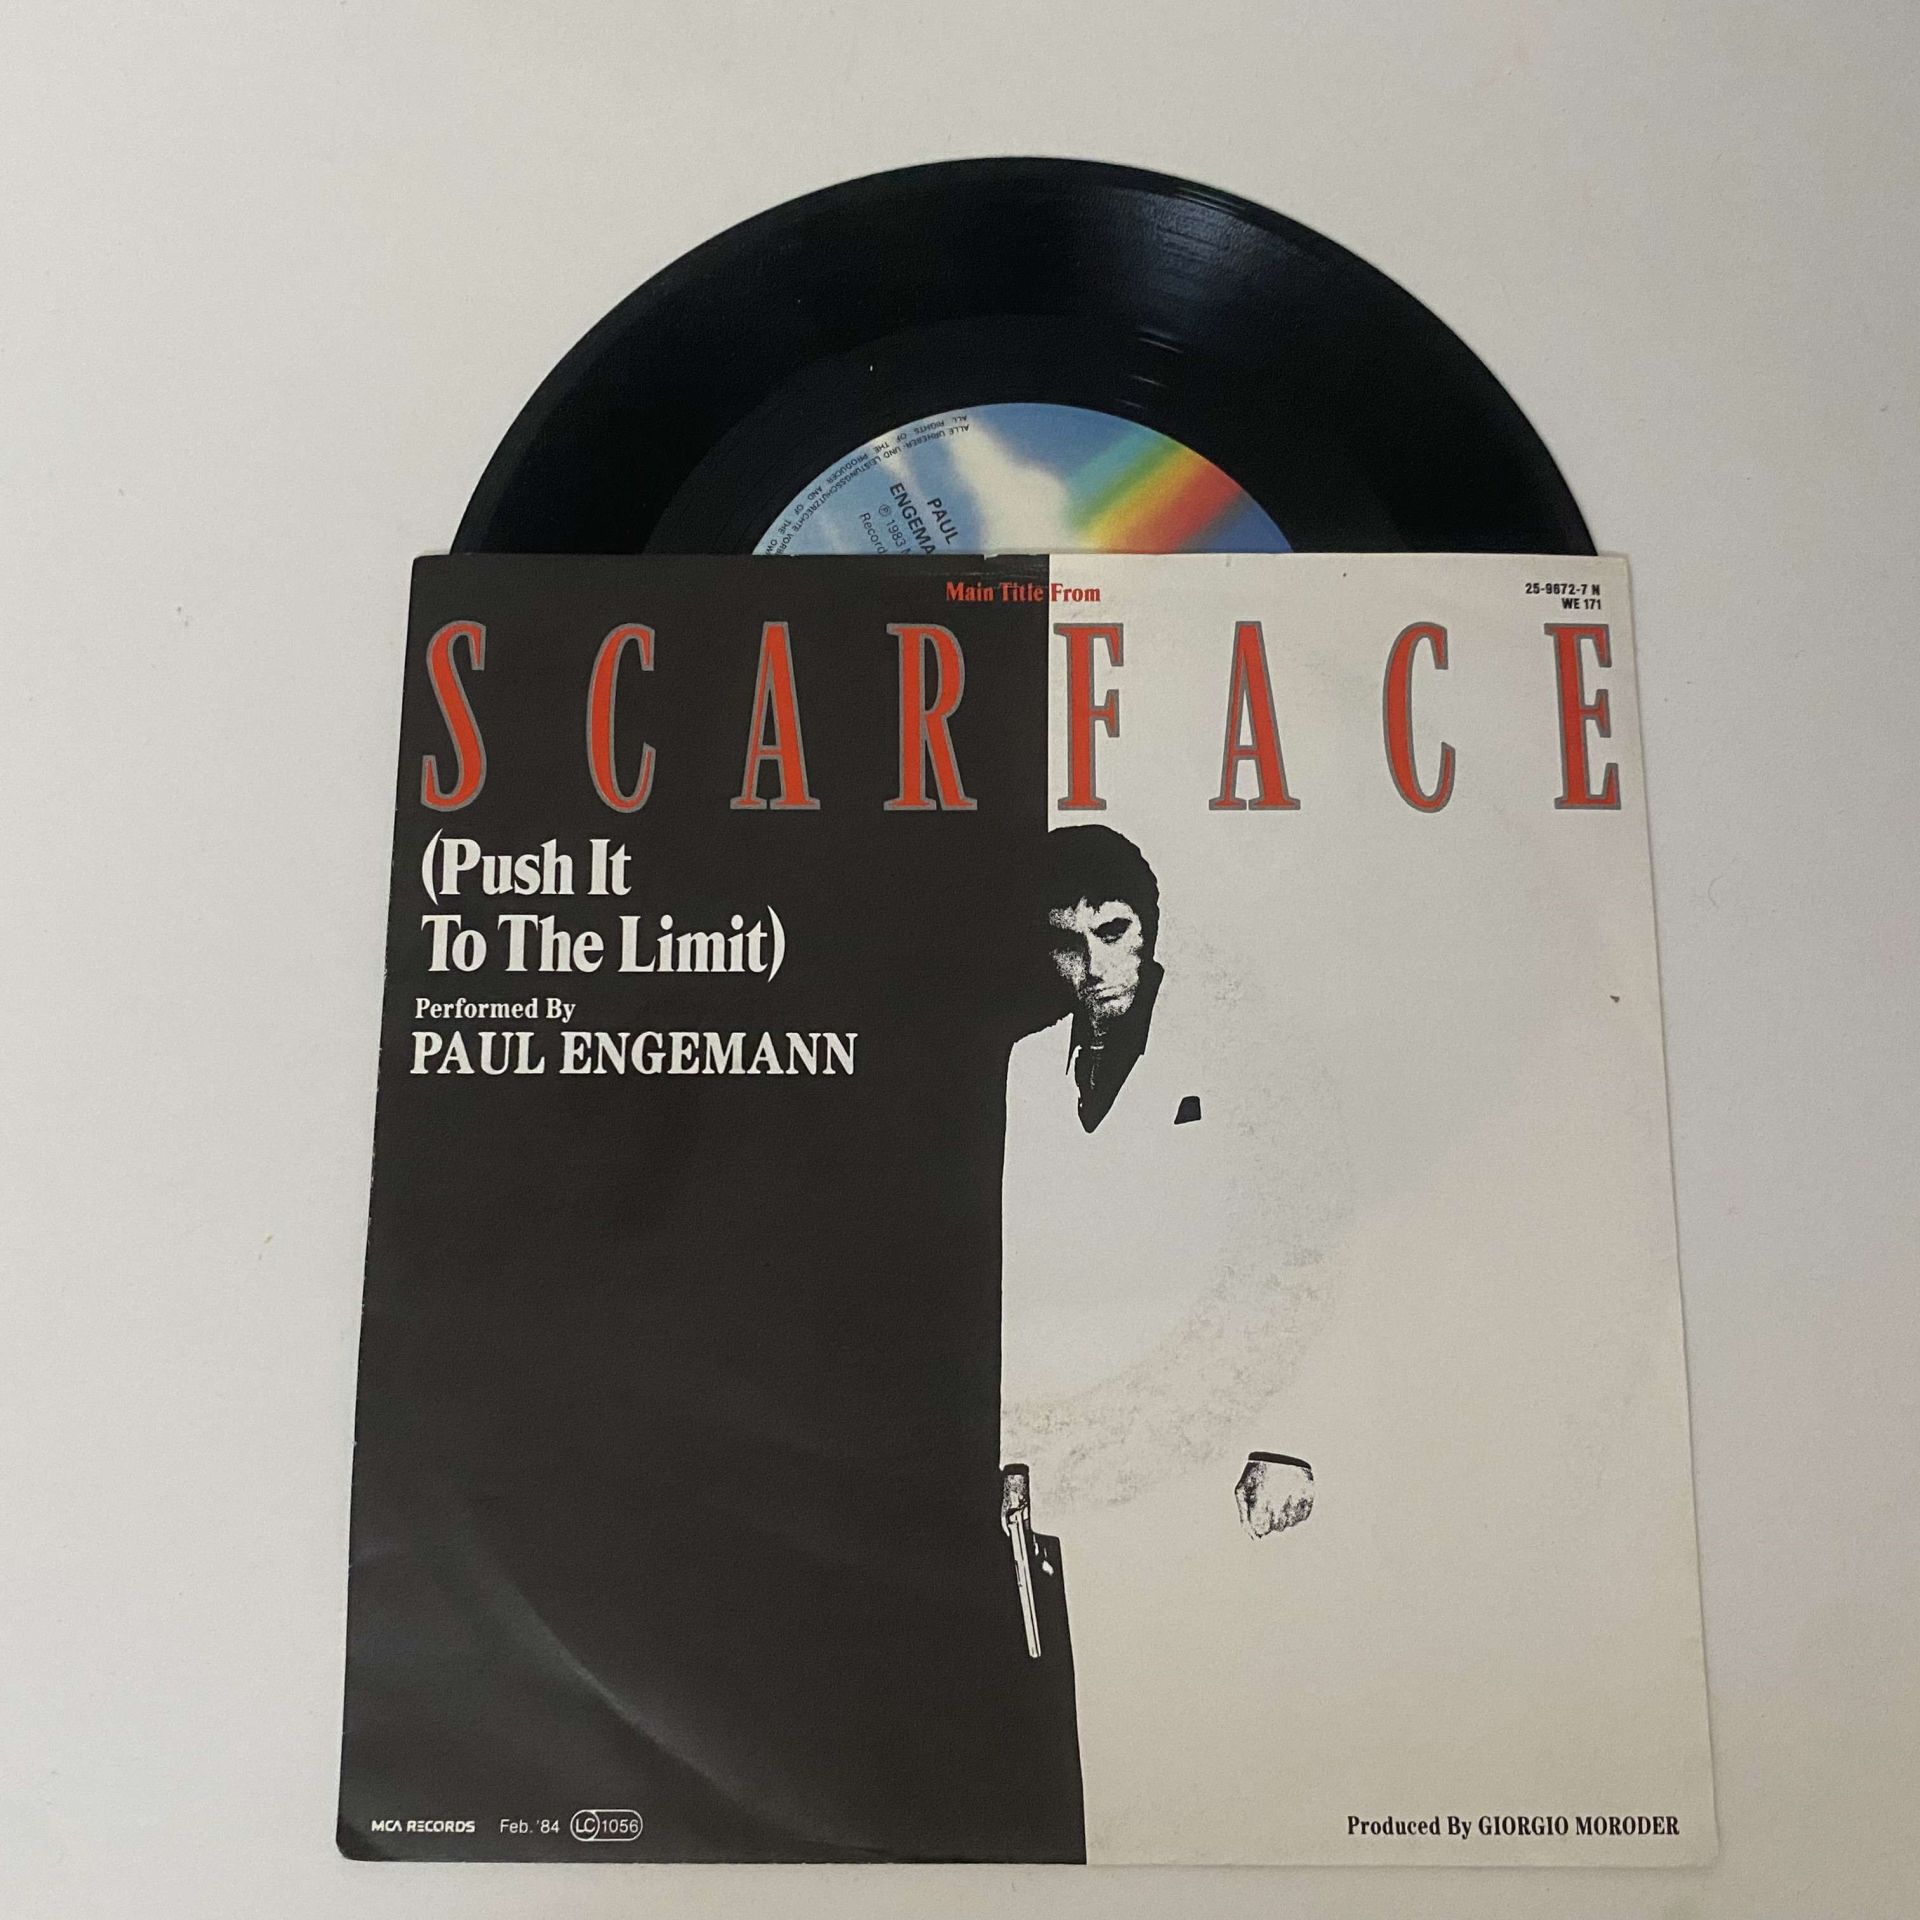 Paul Engemann – Scarface (Push It To The Limit)